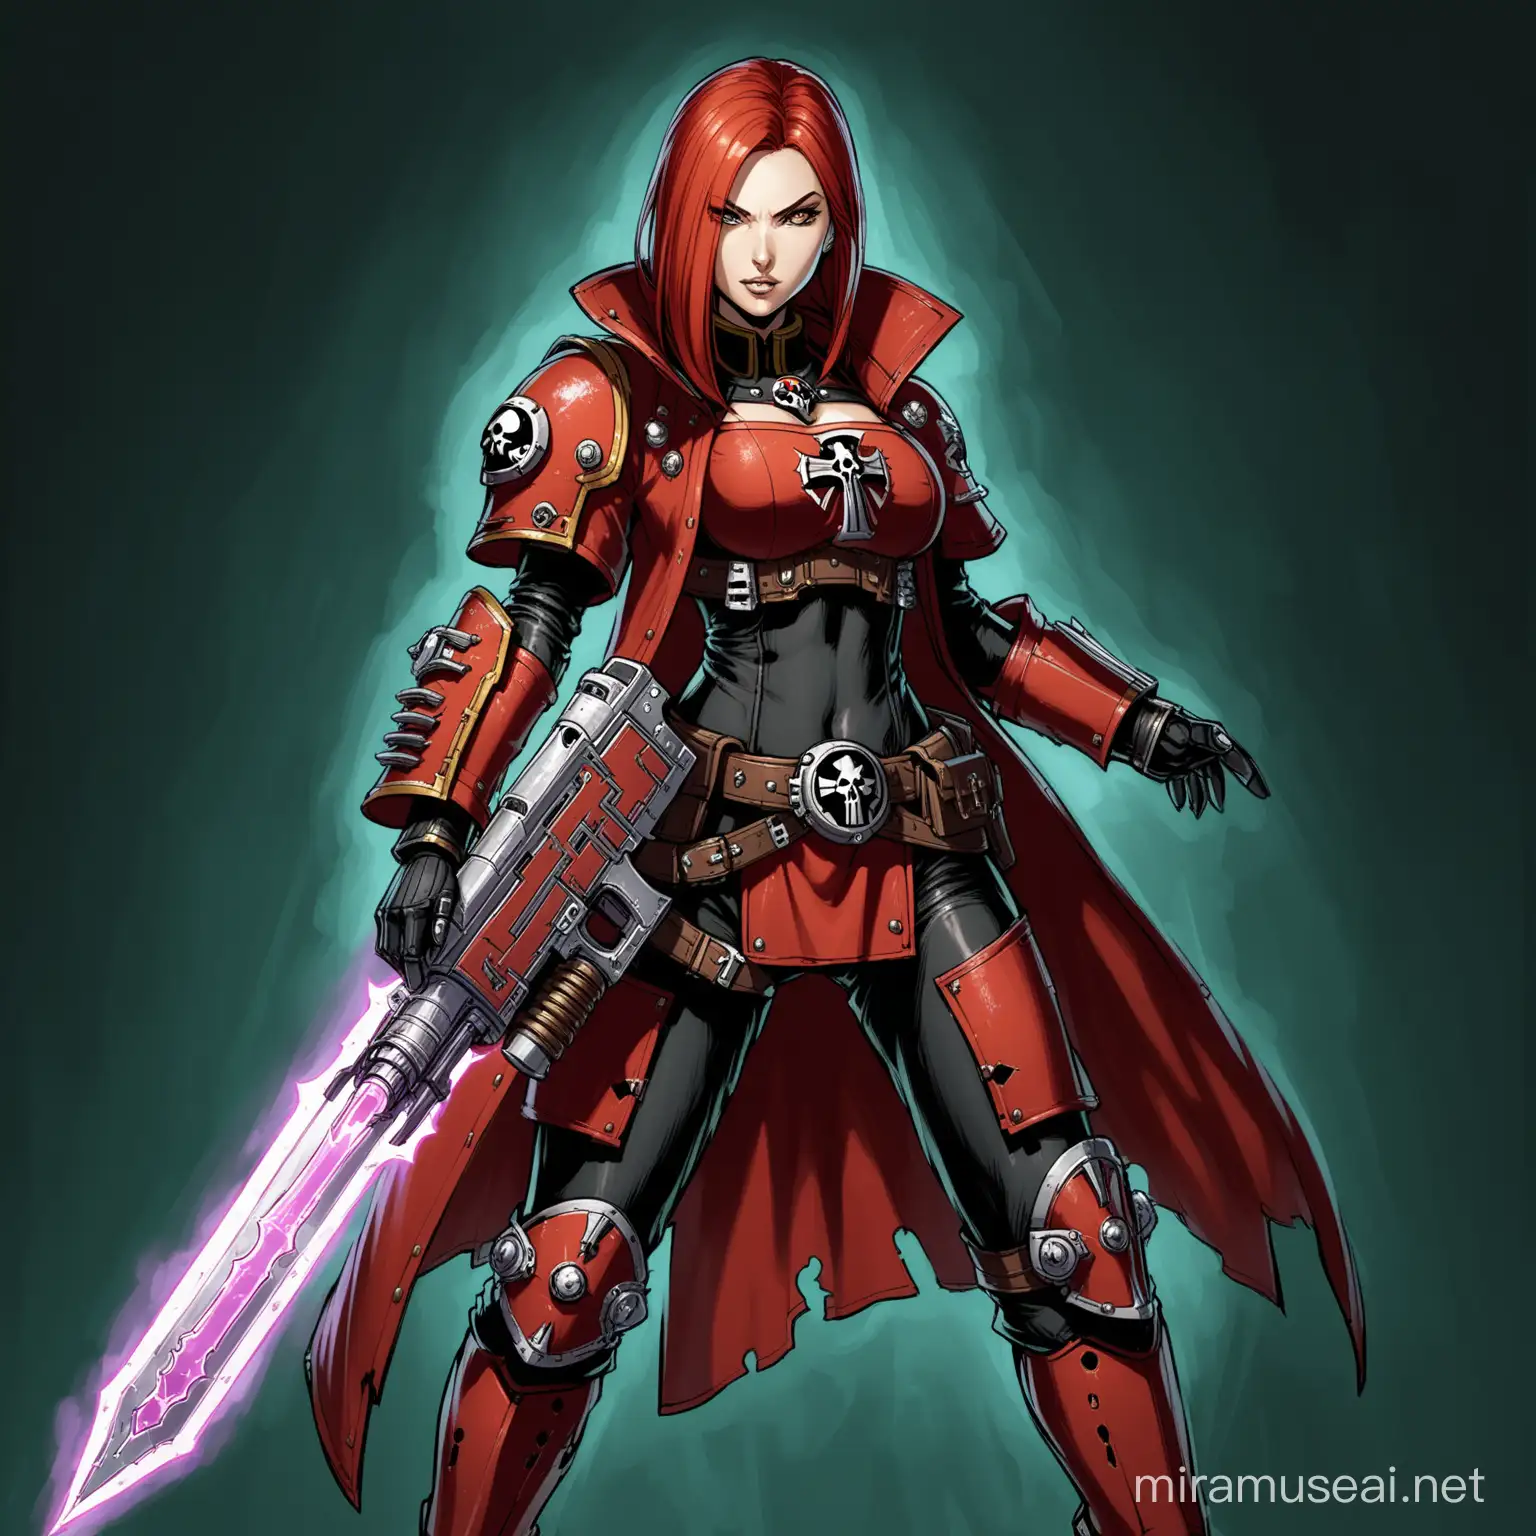 Female Inquisitor wielding Plasma Pistol and Energy Sword in Warhammer 40k Universe